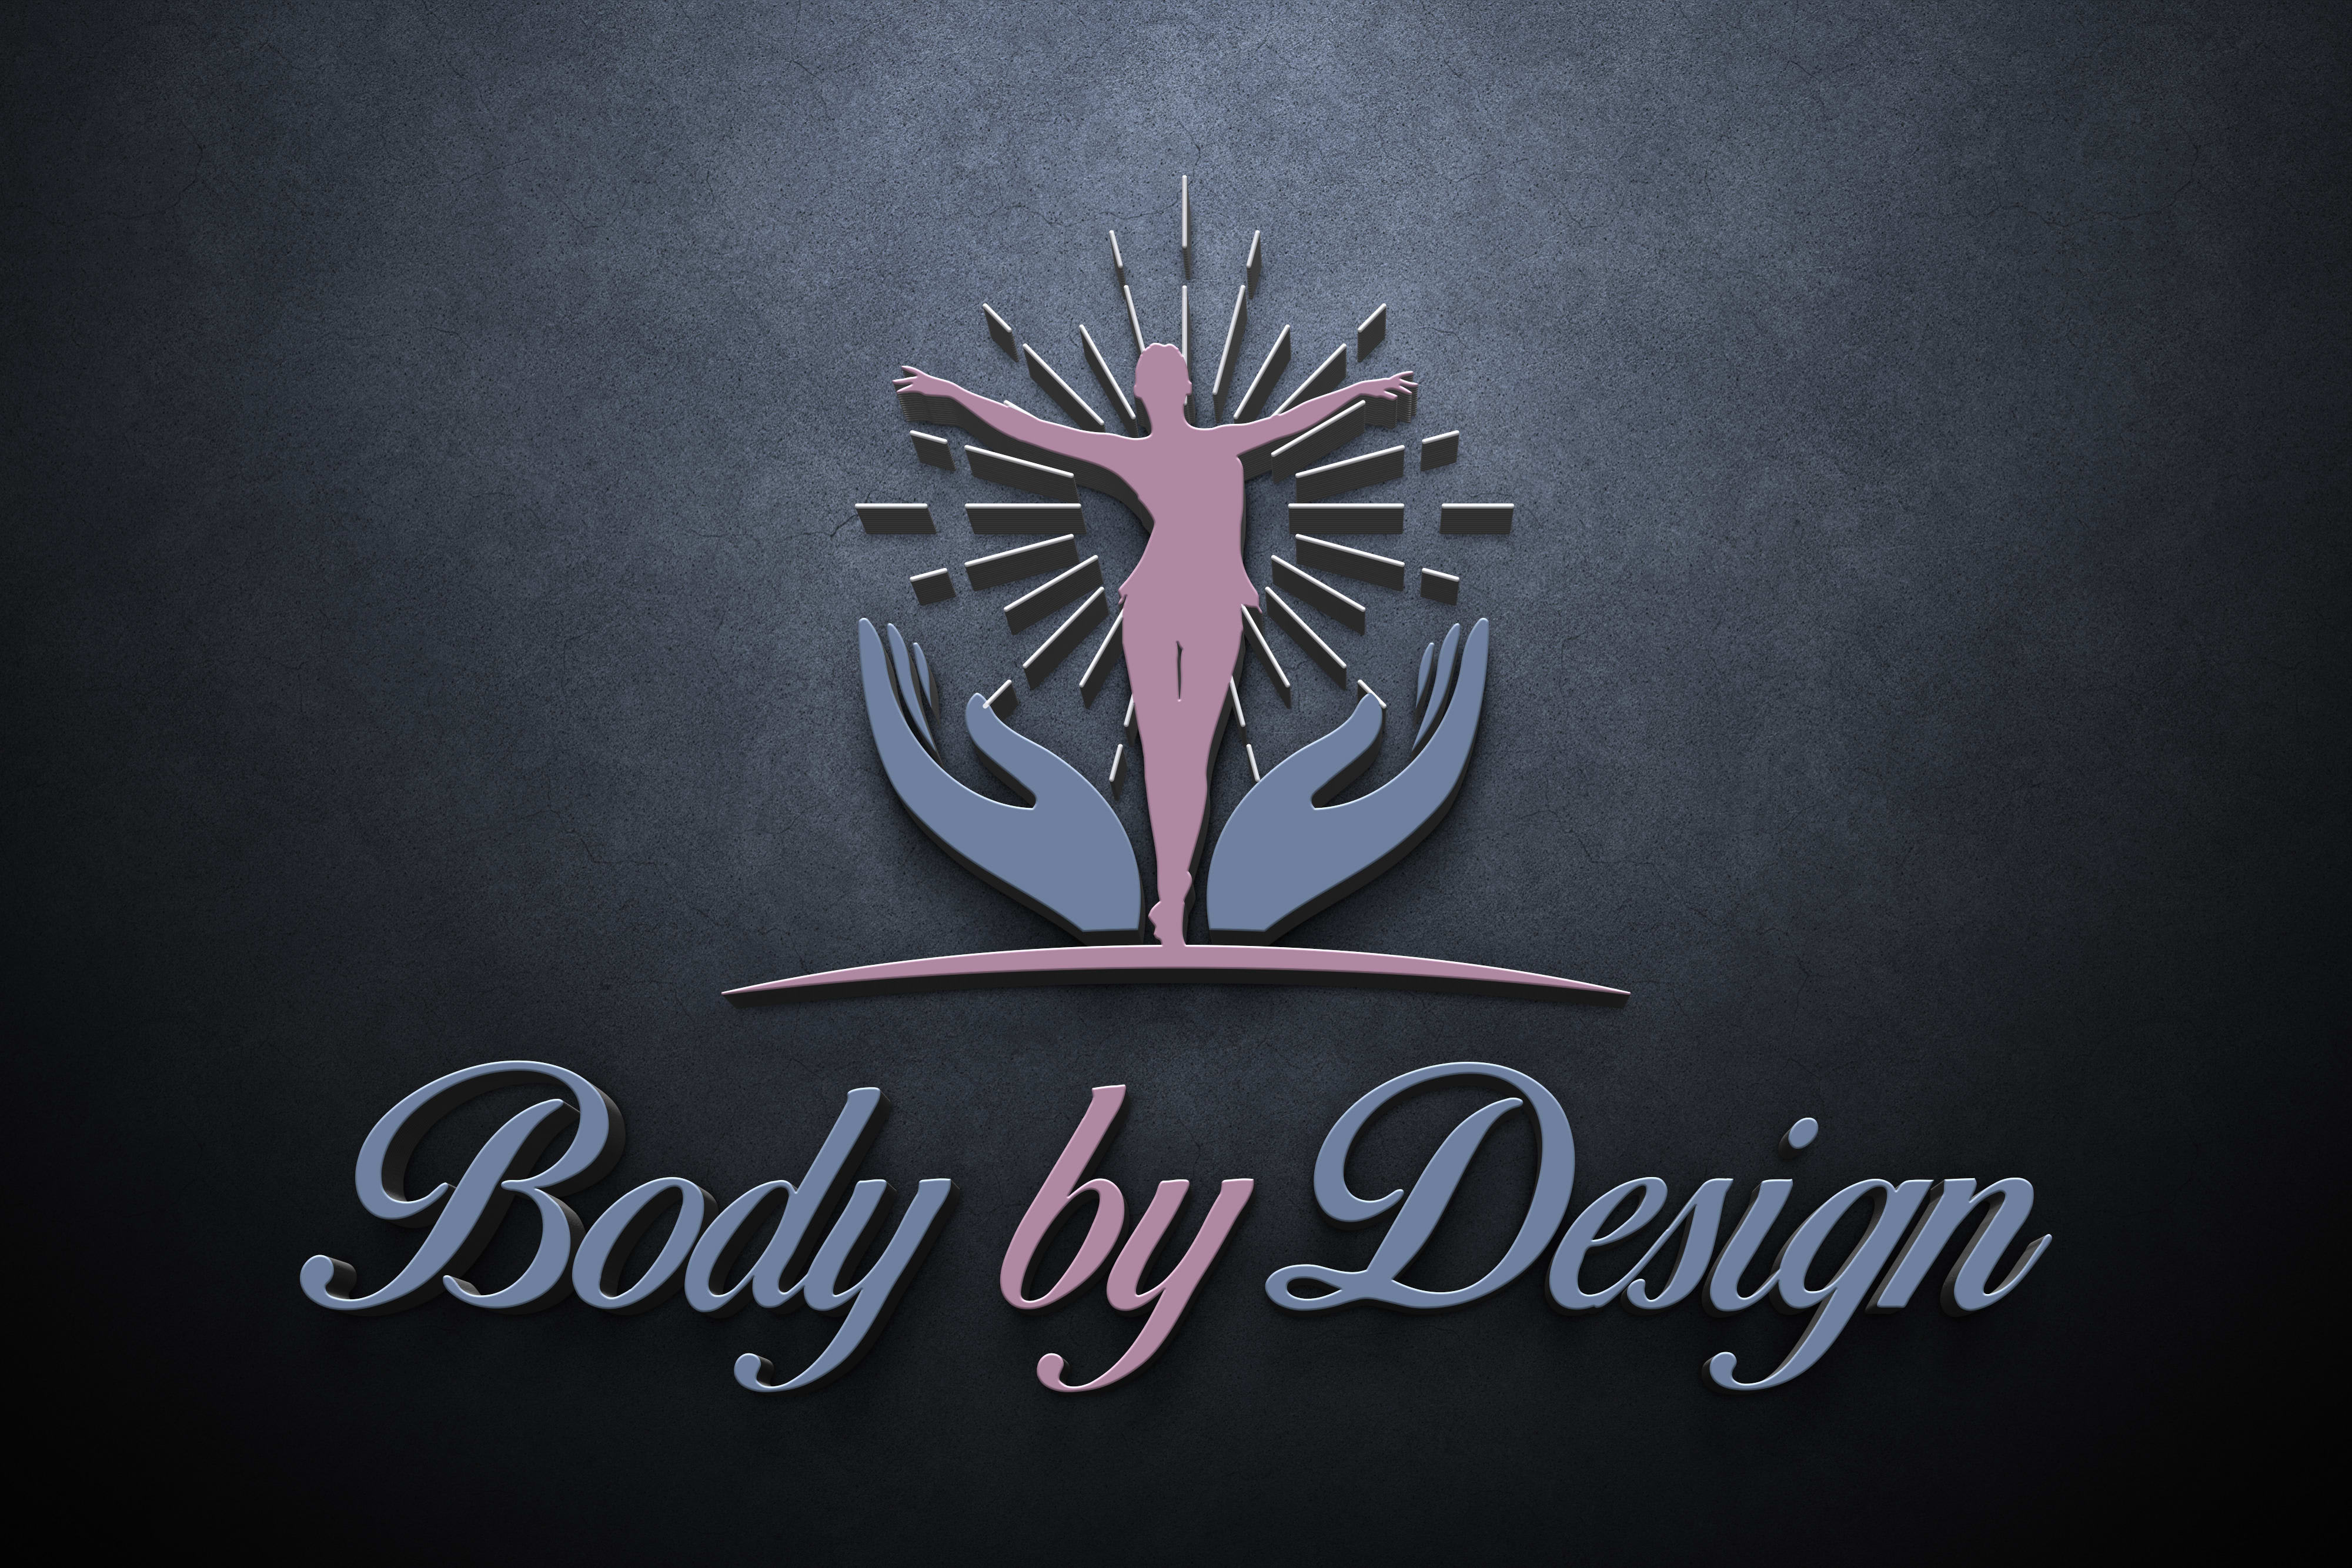 Body by Design, LLC